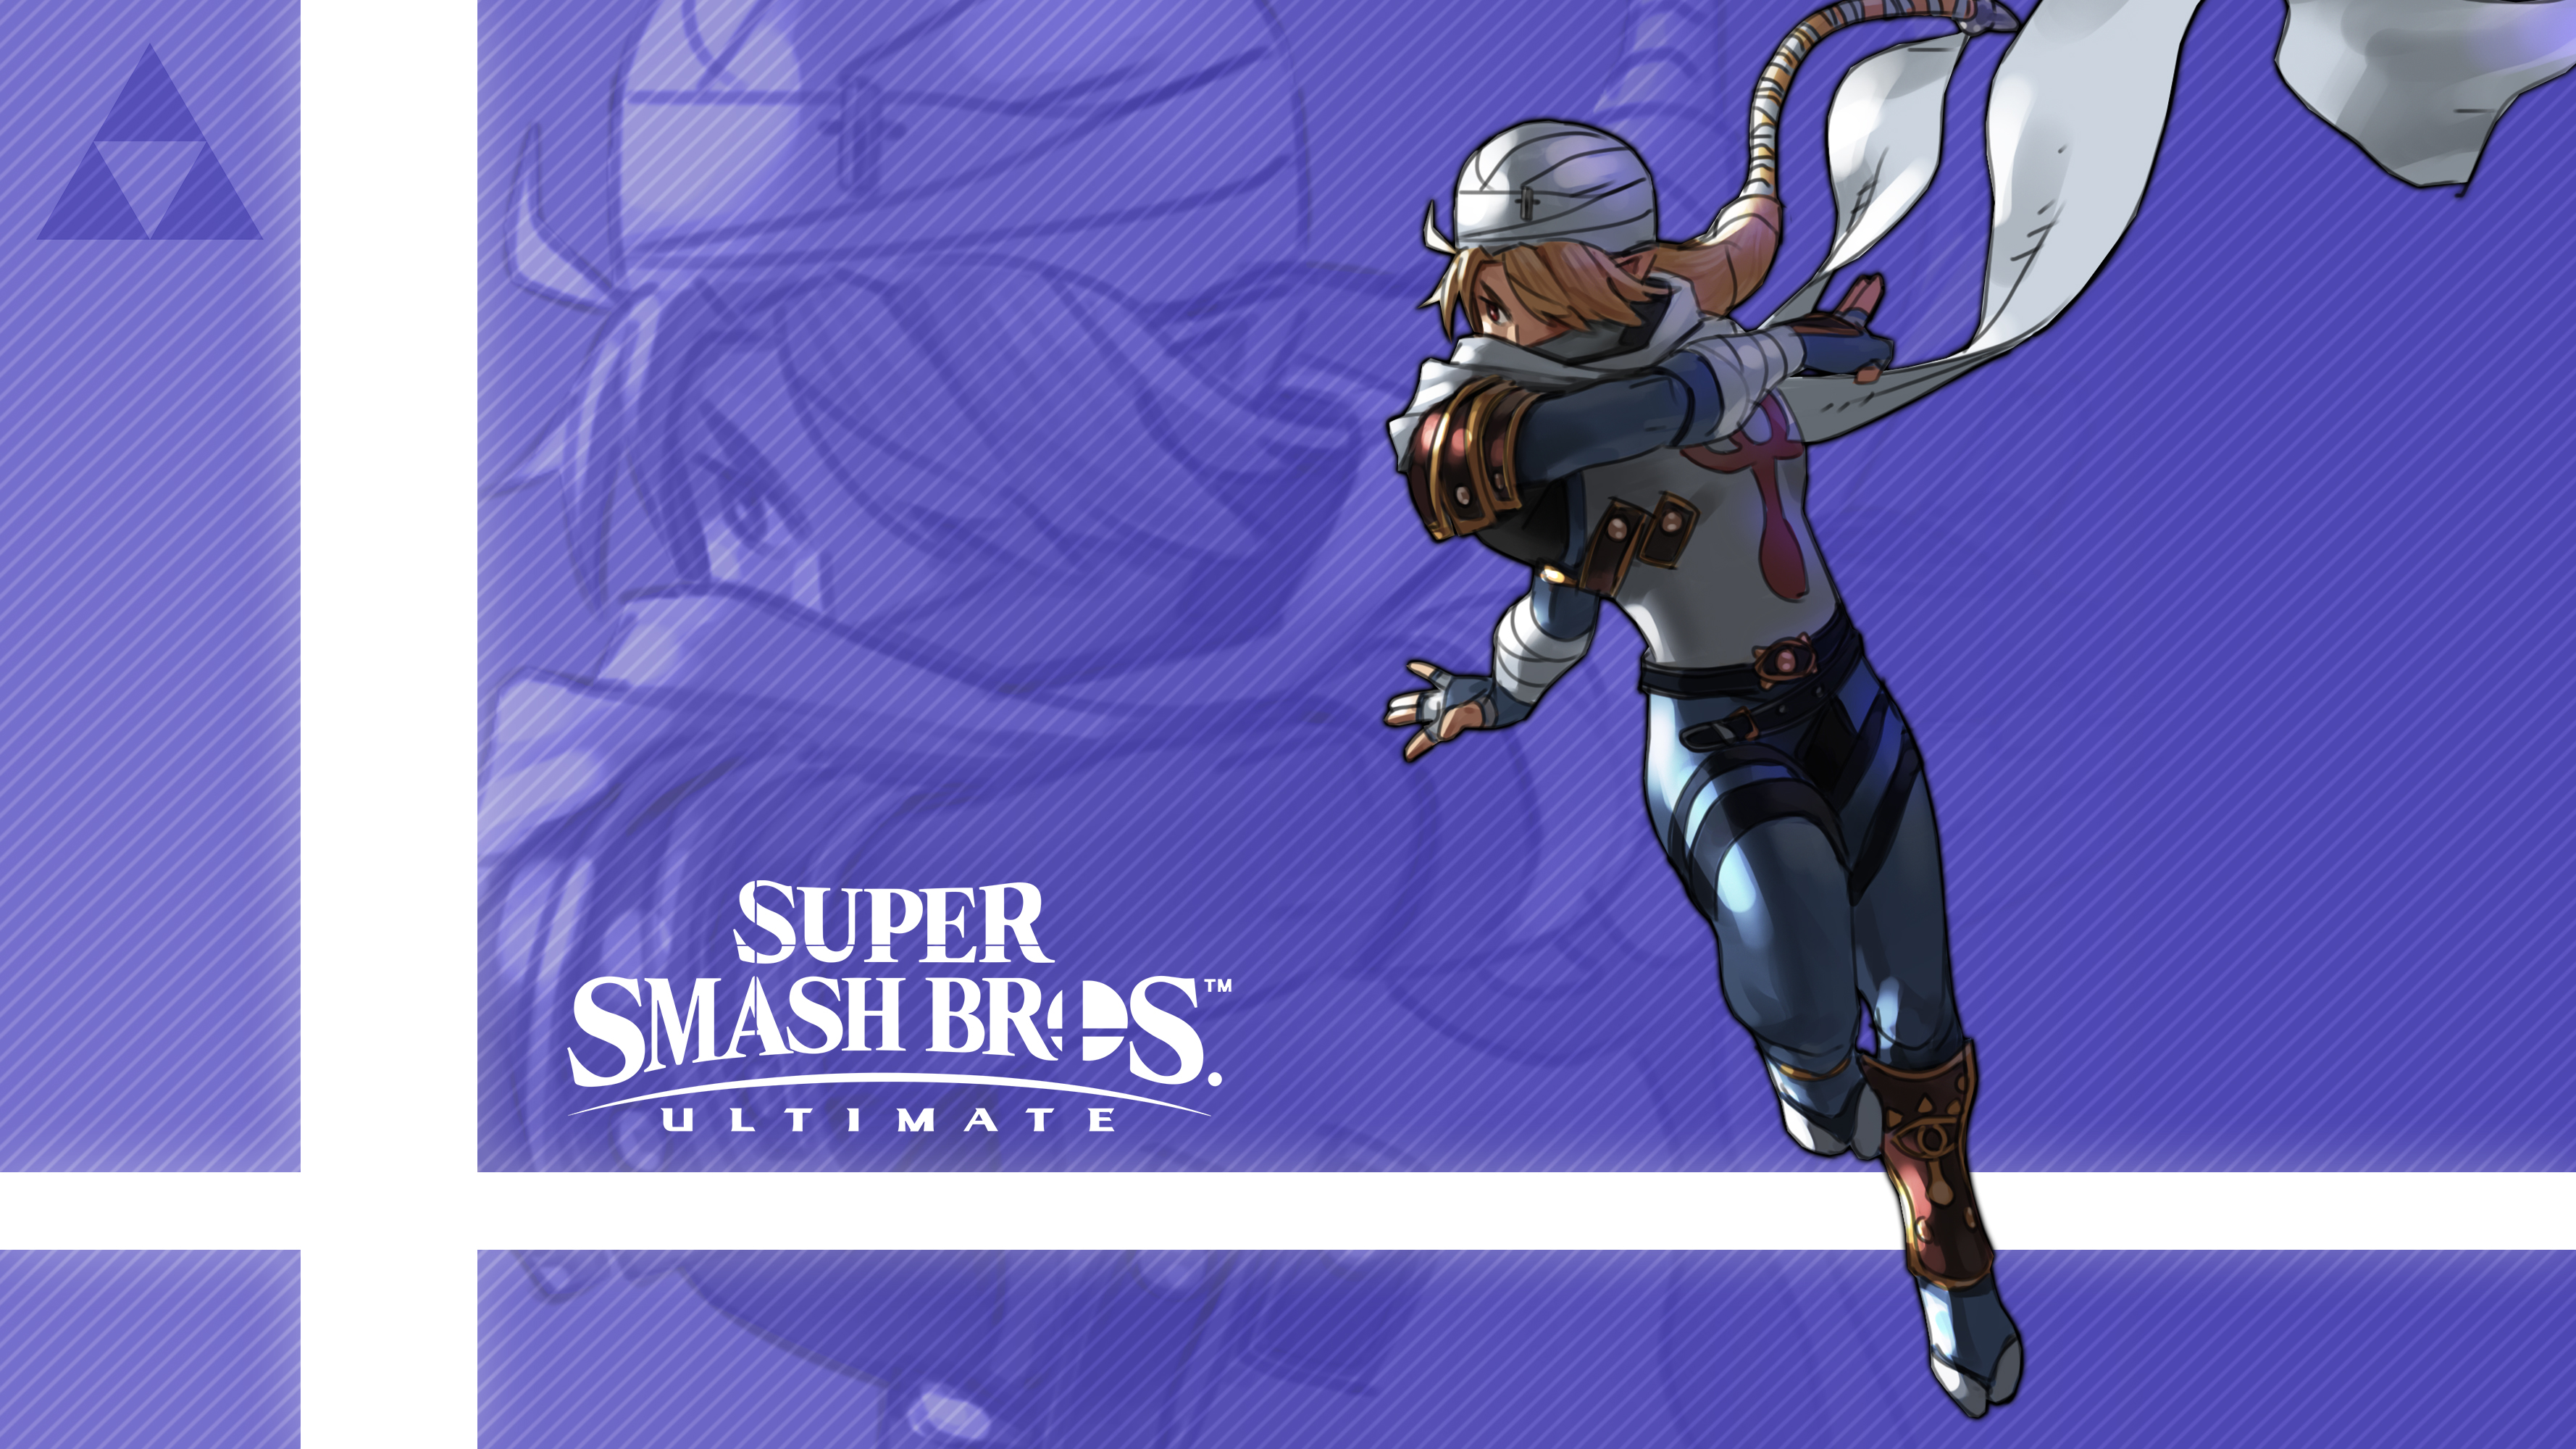 Sheik In Super Smash Bros. Ultimate by Callum Nakajima